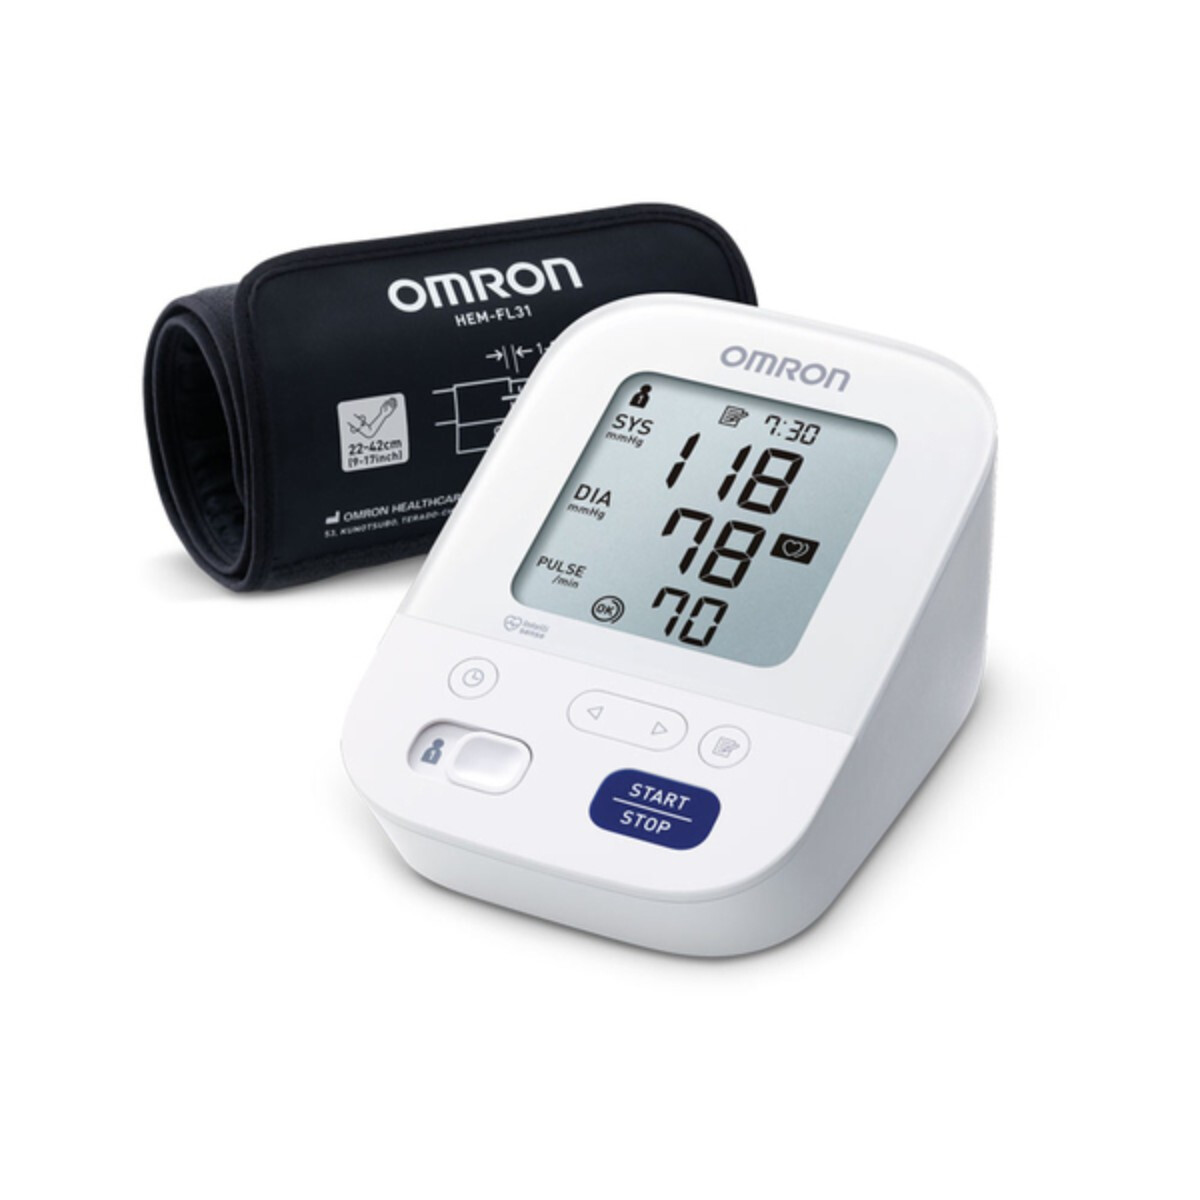 ernstig web ruilen Upper arm blood pressure monitor - comfortable and exact